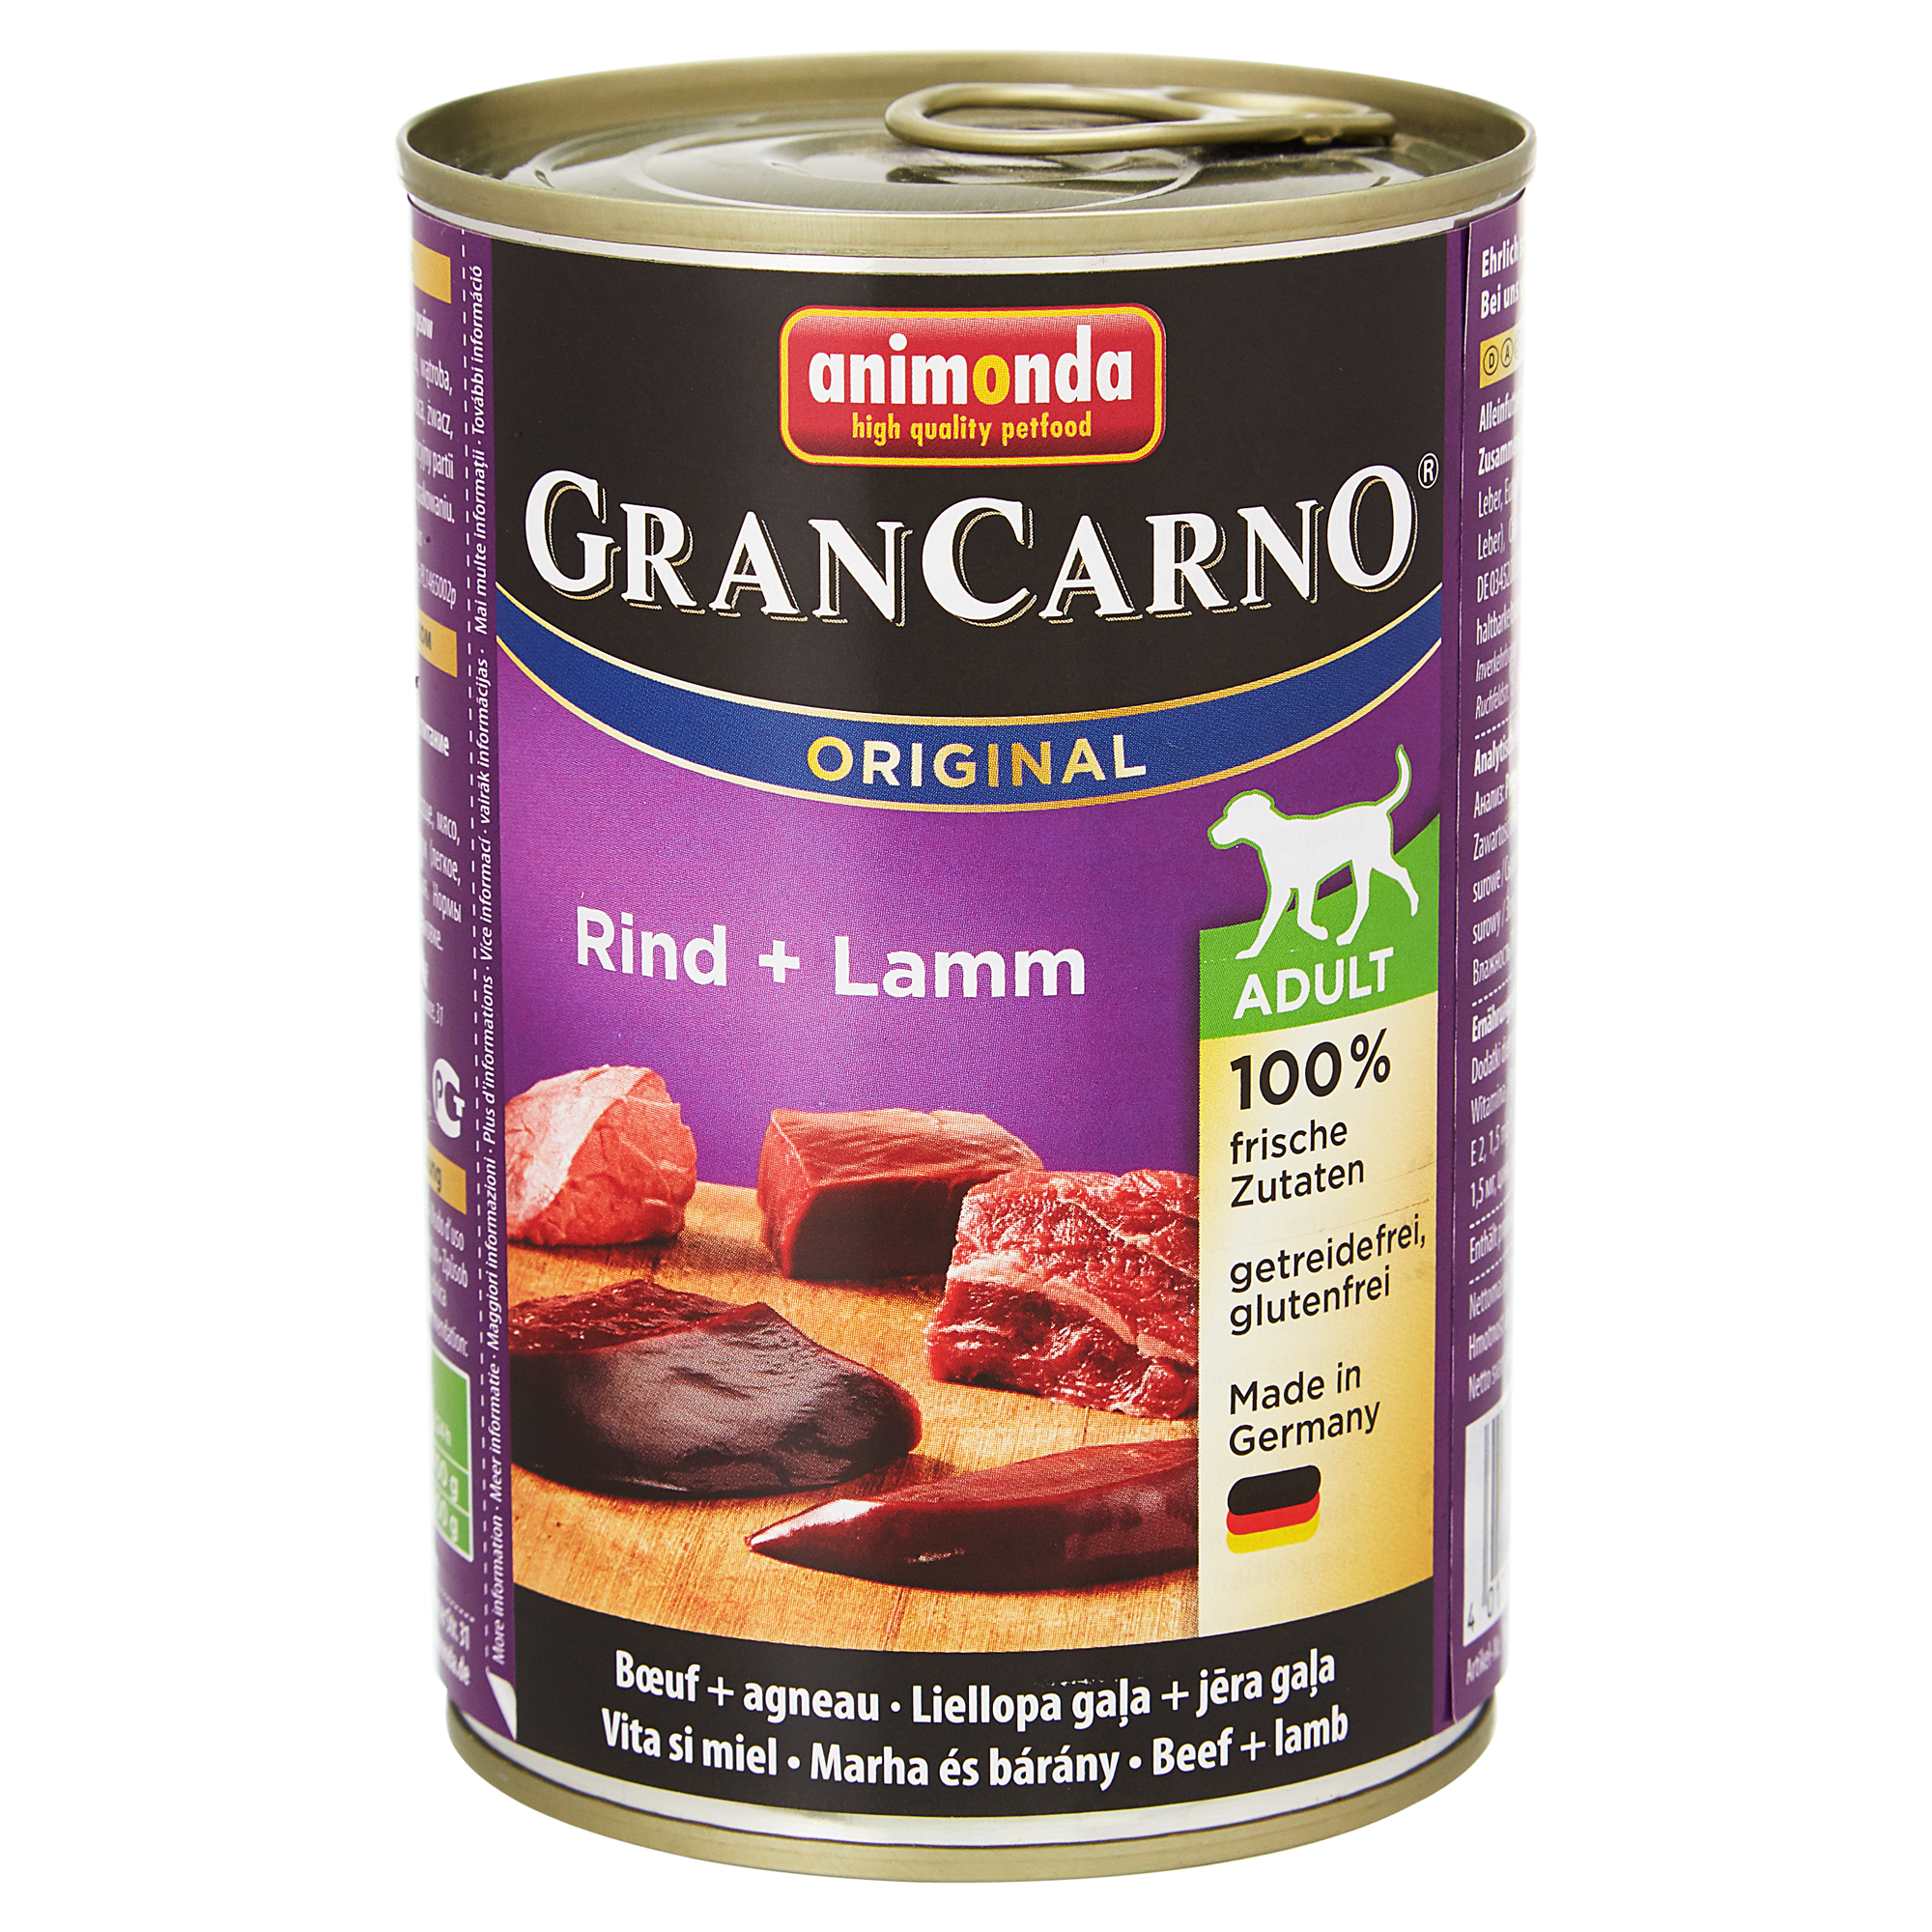 Hundenassfutter "Gran Carno" Original mit Rind/Lamm 400 g + product picture